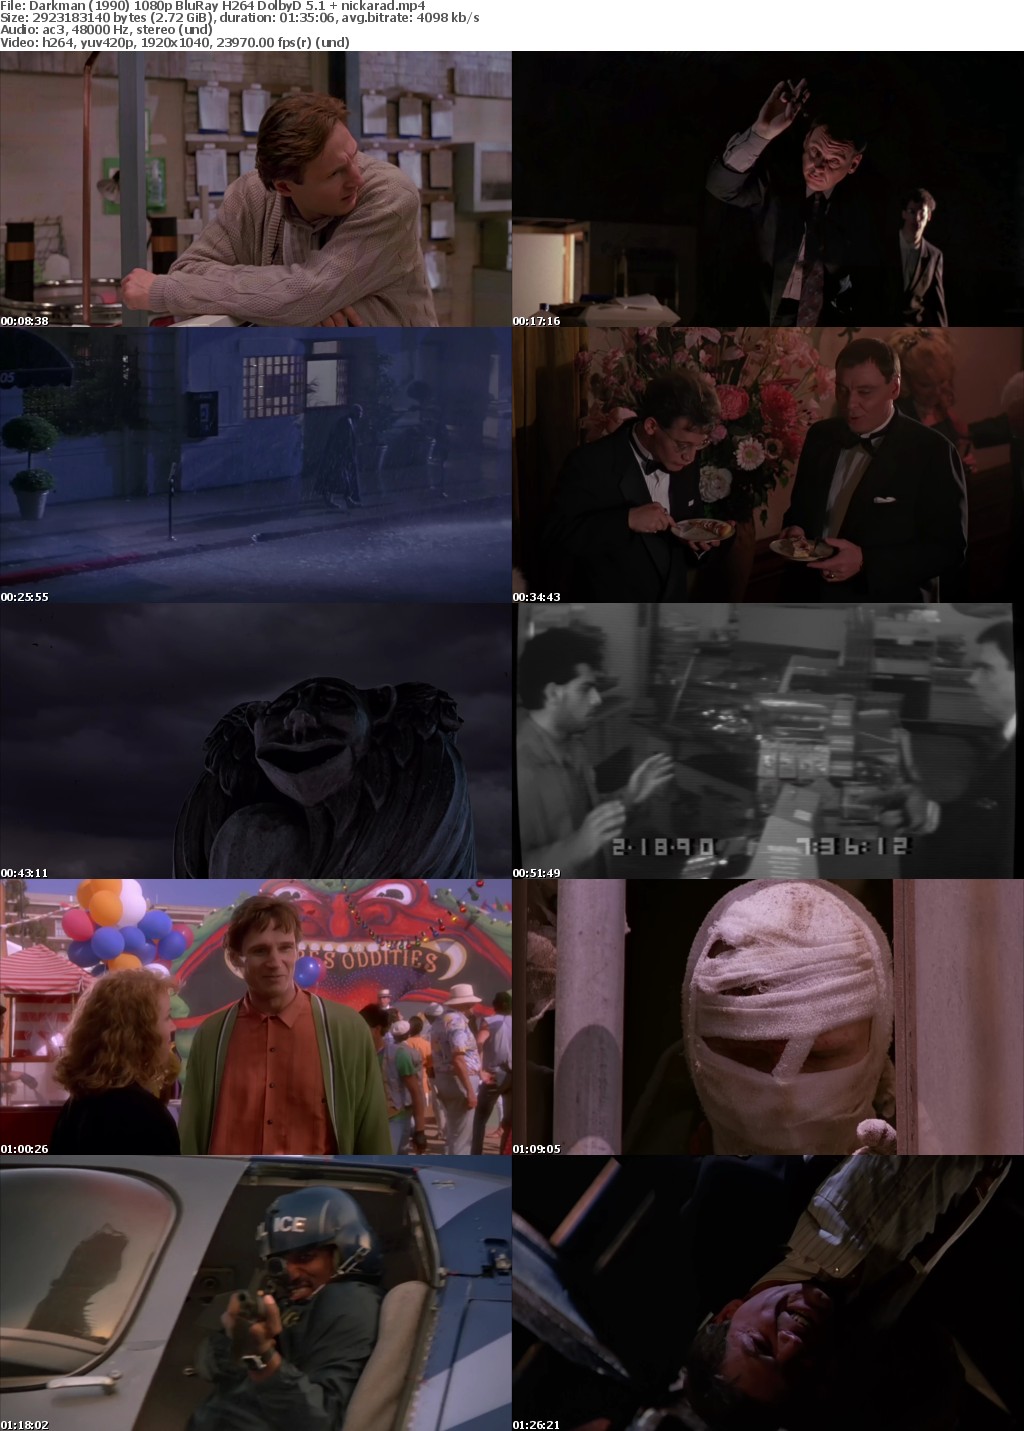 Darkman (1990) 1080p BluRay H264 DolbyD 5 1 nickarad